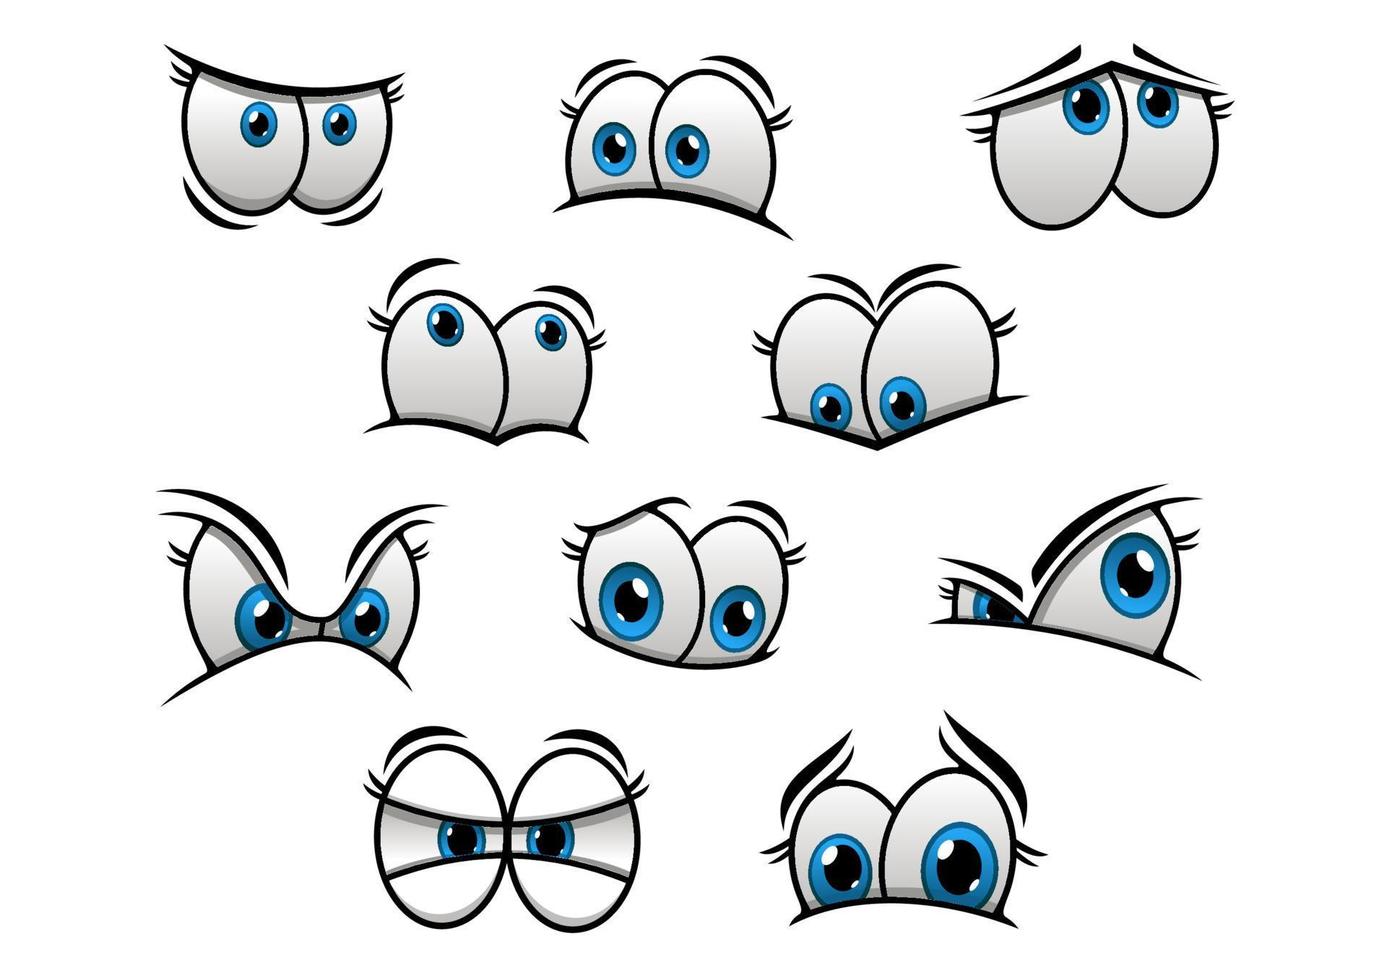 grandes ojos azules en estilo de dibujos animados o cómic 11520899 Vector  en Vecteezy